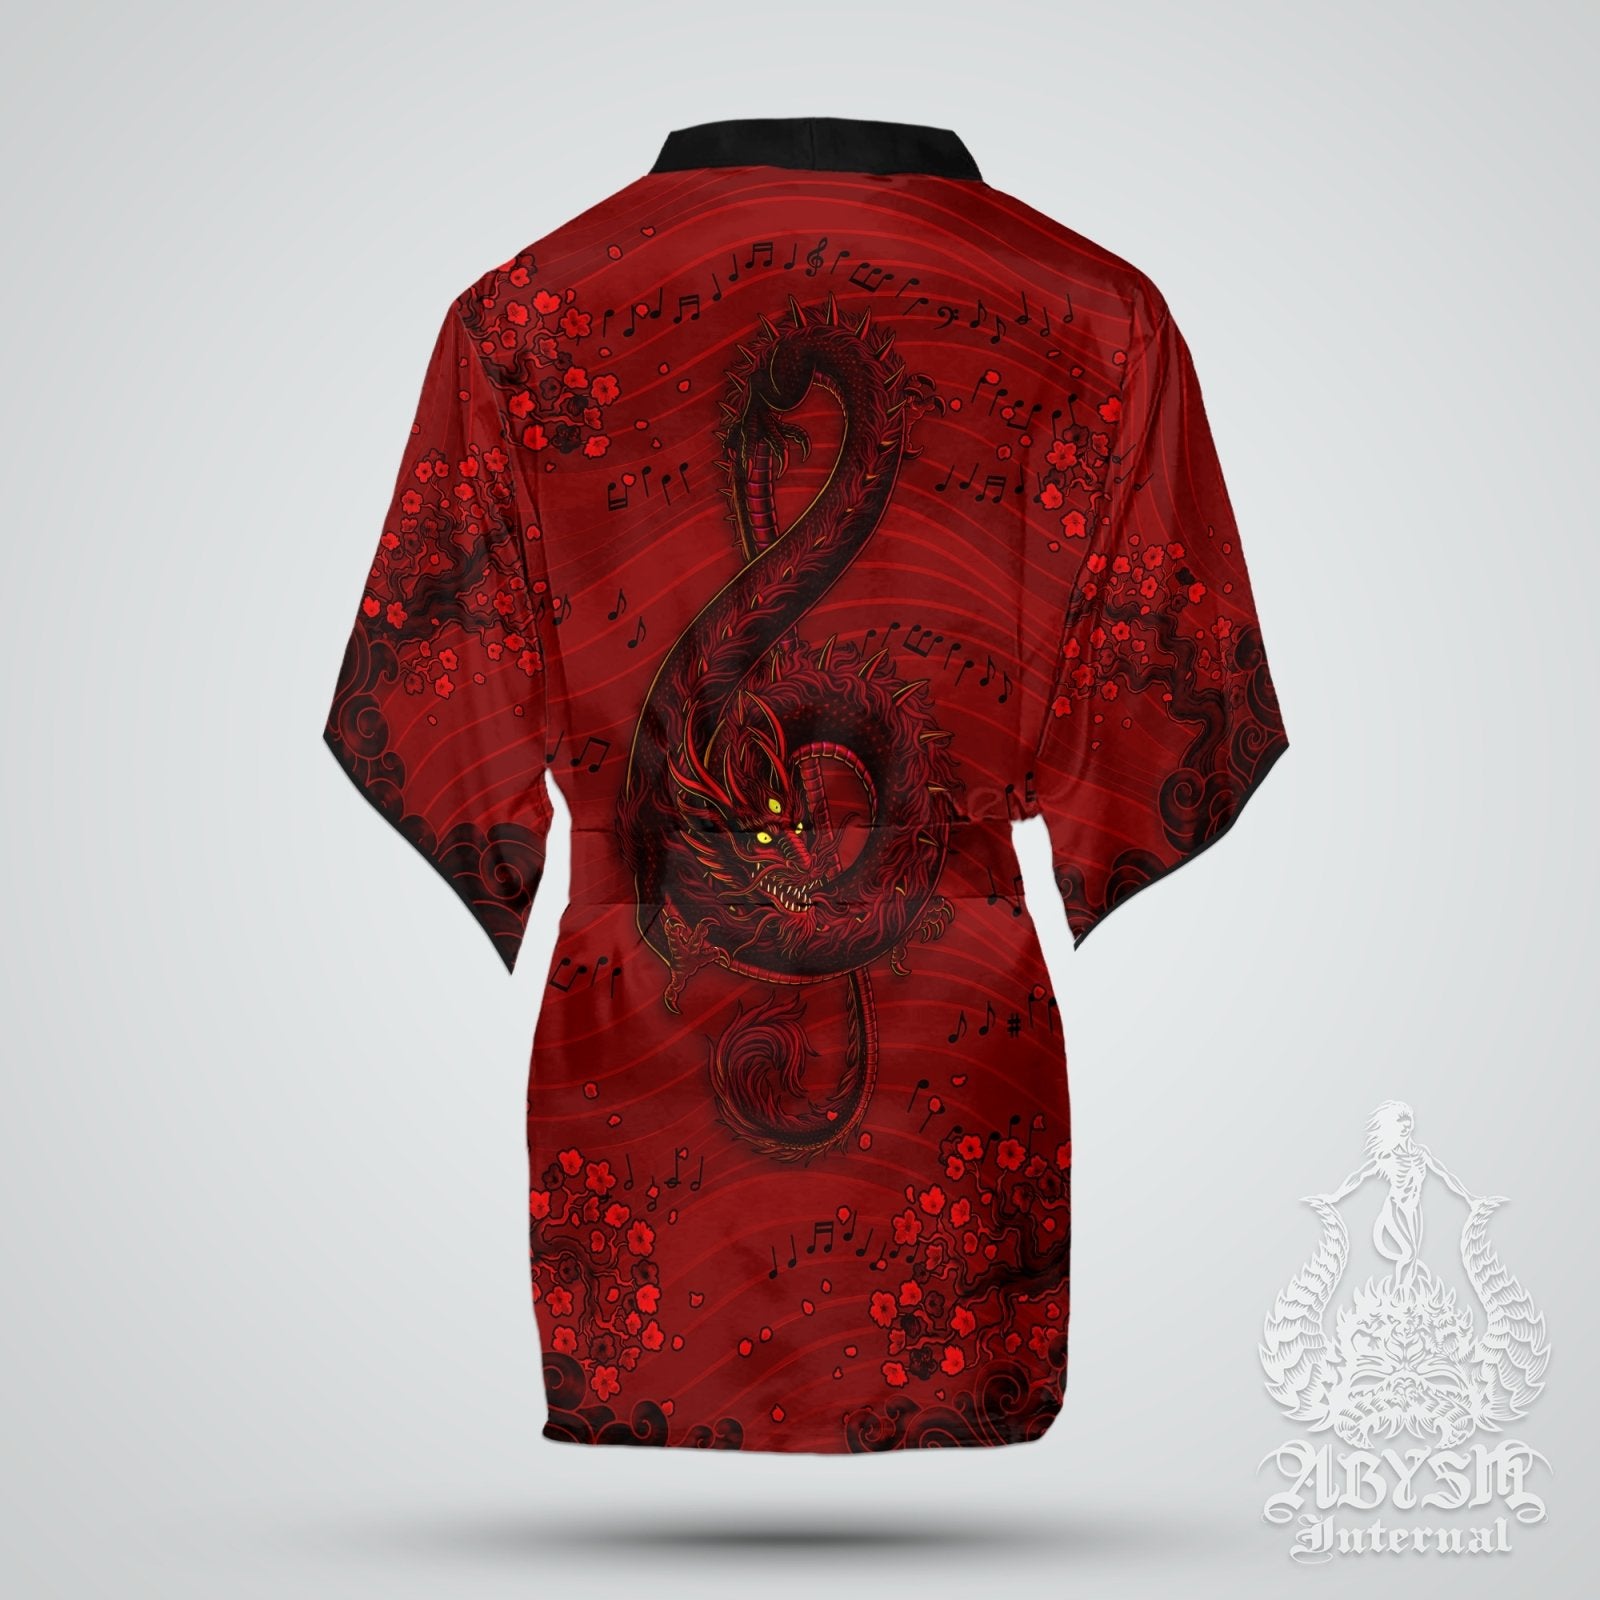 Dragon Kimono, Dressing Robe, Open Shirt, Music Festival Outfit, Alternative Clothing, Gothic Summer Streetwear, Unisex - Demon - Abysm Internal